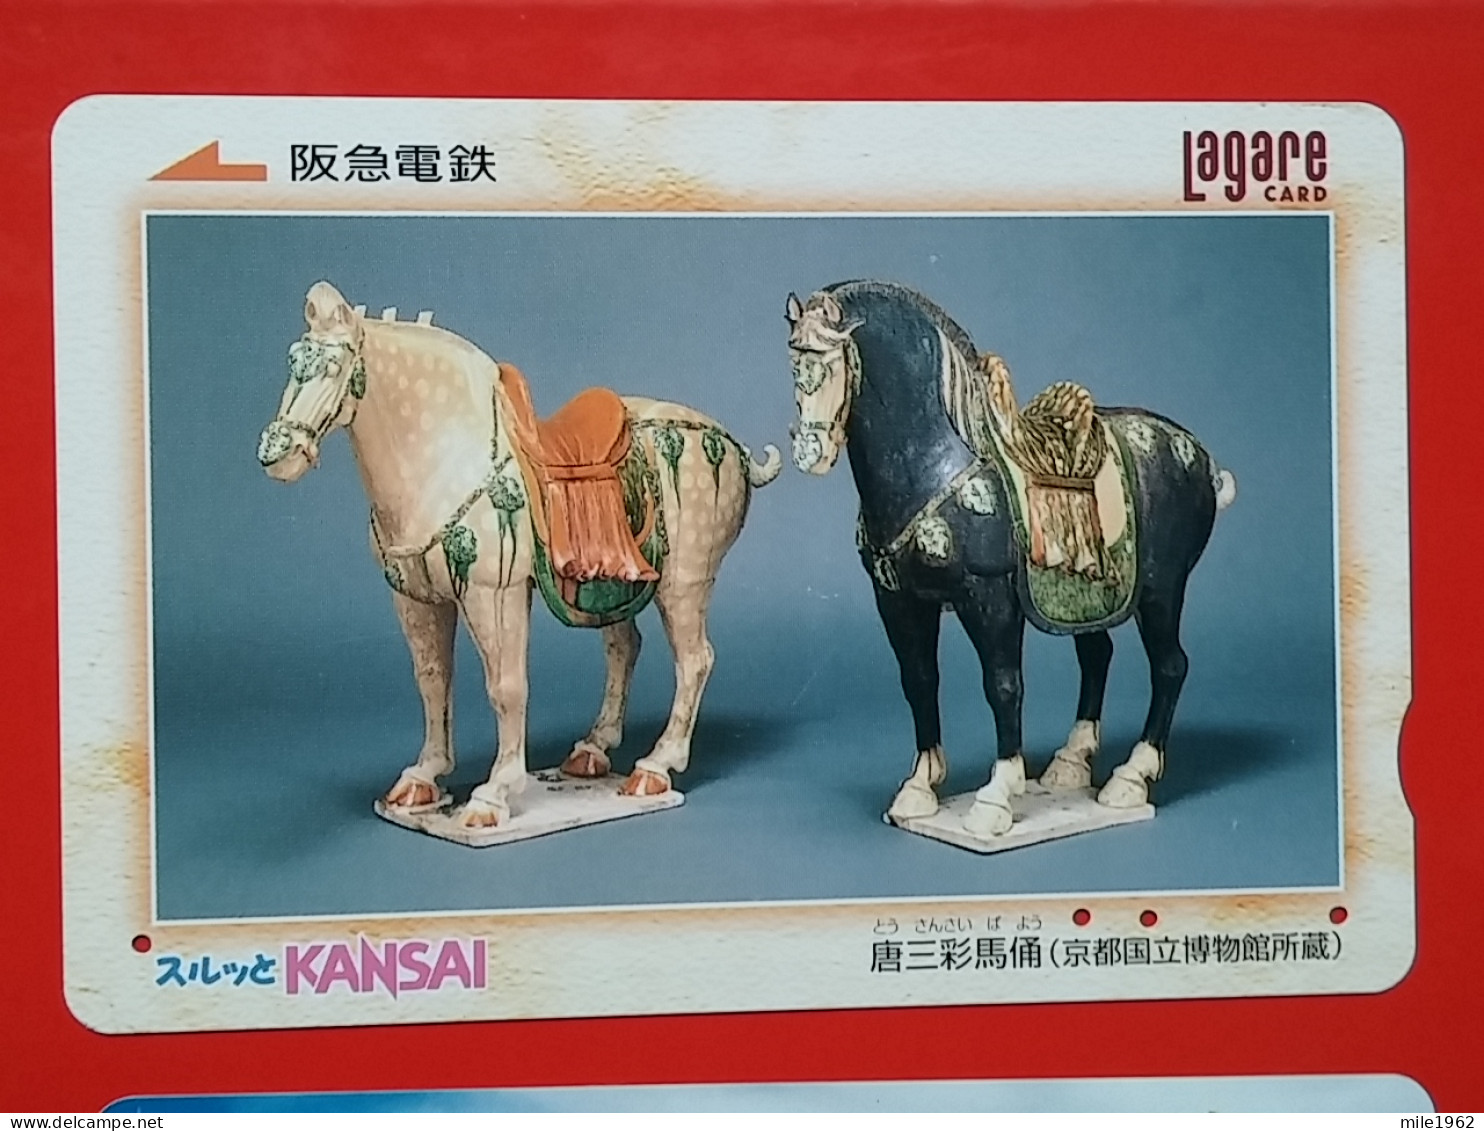 T-203 - JAPAN -JAPON, NIPON, Carte Prepayee  ANIMAL, HORSE, CHEVAL - Chevaux